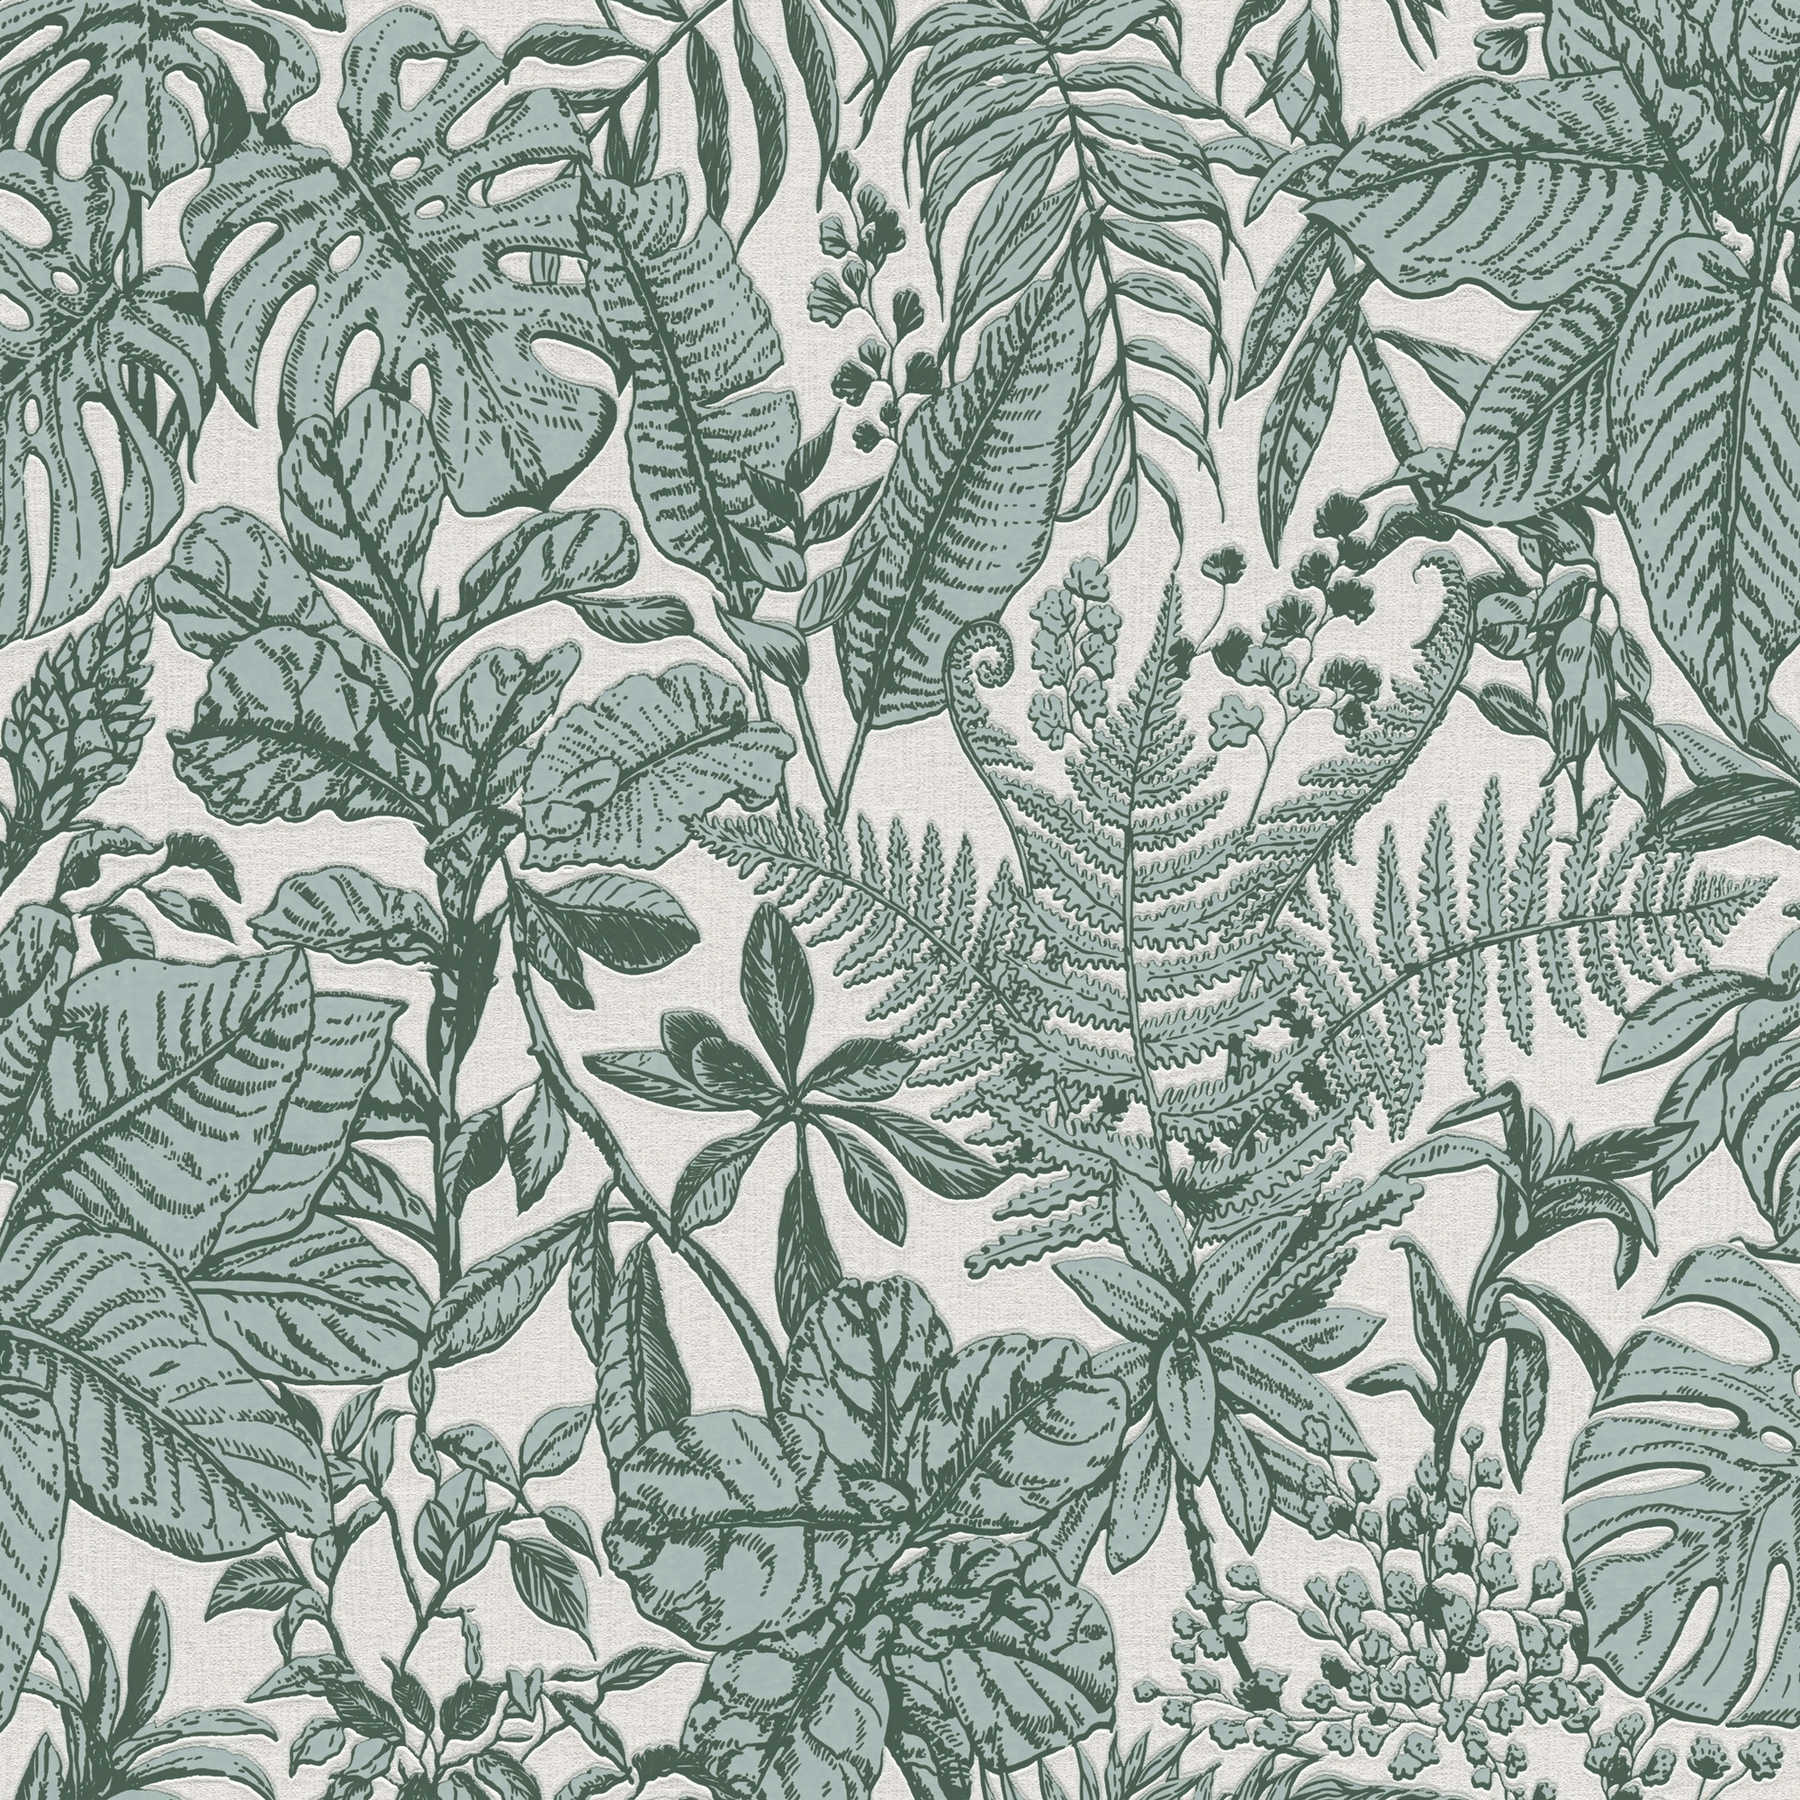 Tapete Dschungel Blätter, Monstera & Farne – Grün, Weiß, Grau
